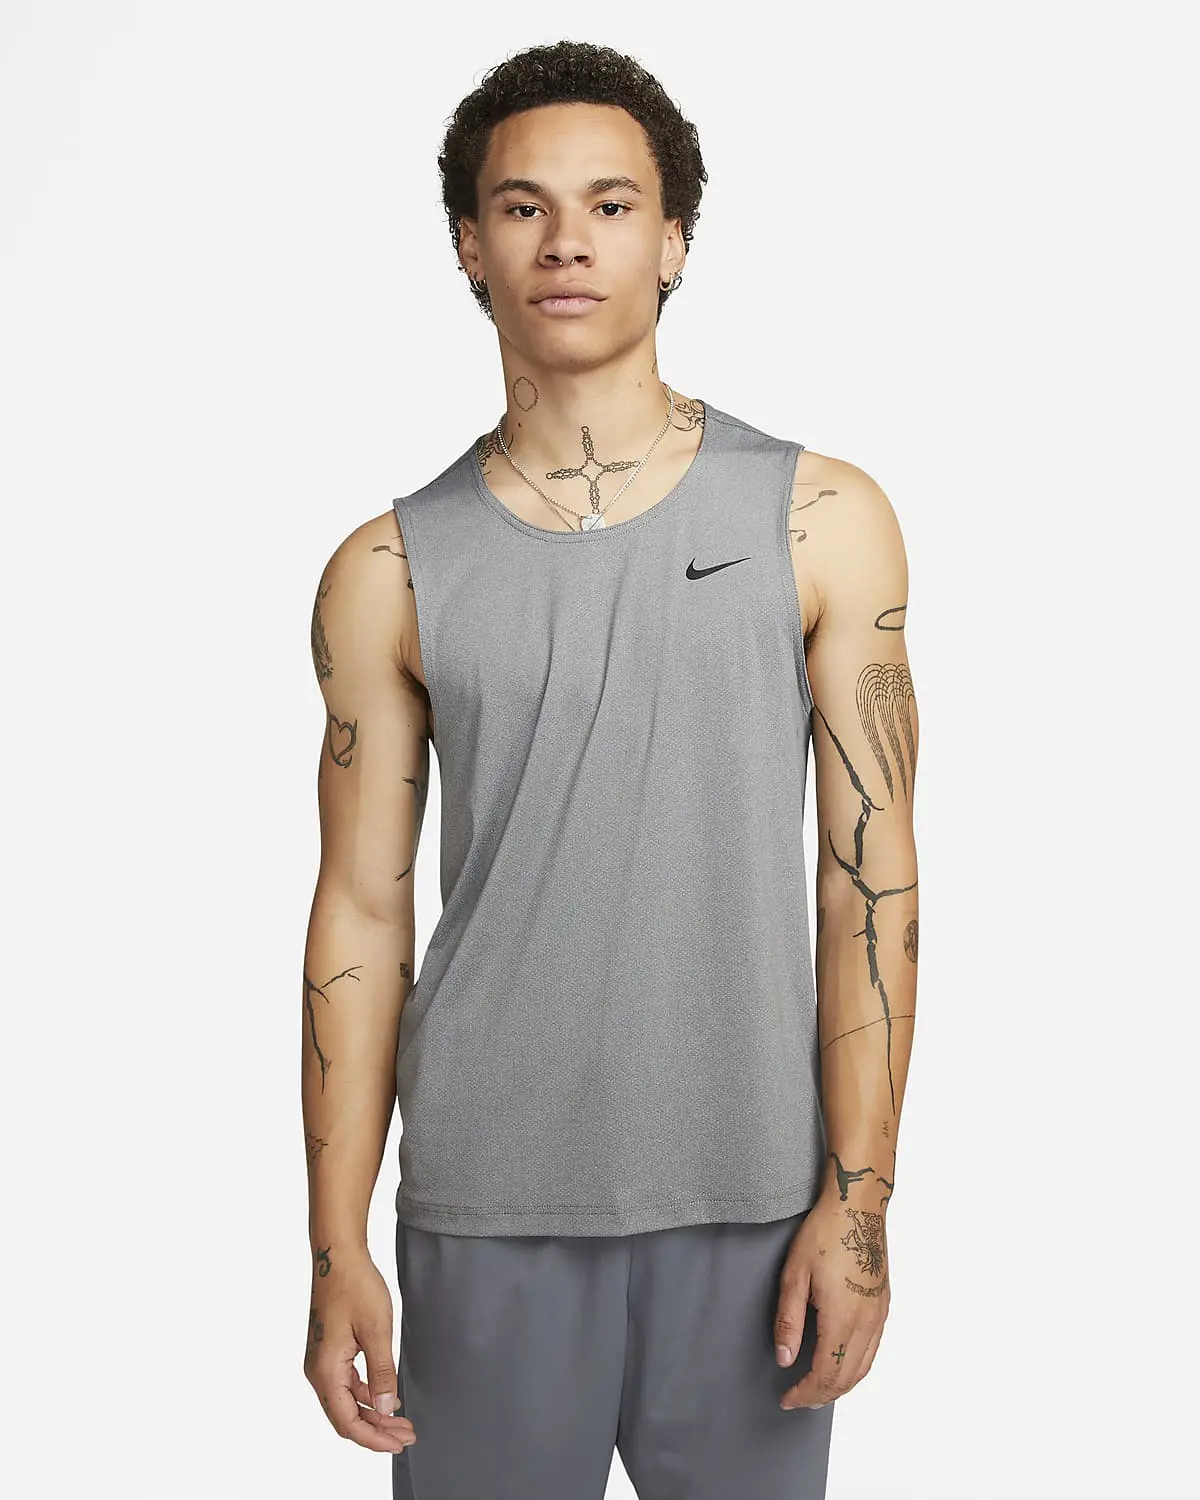 Nike Ready. 1